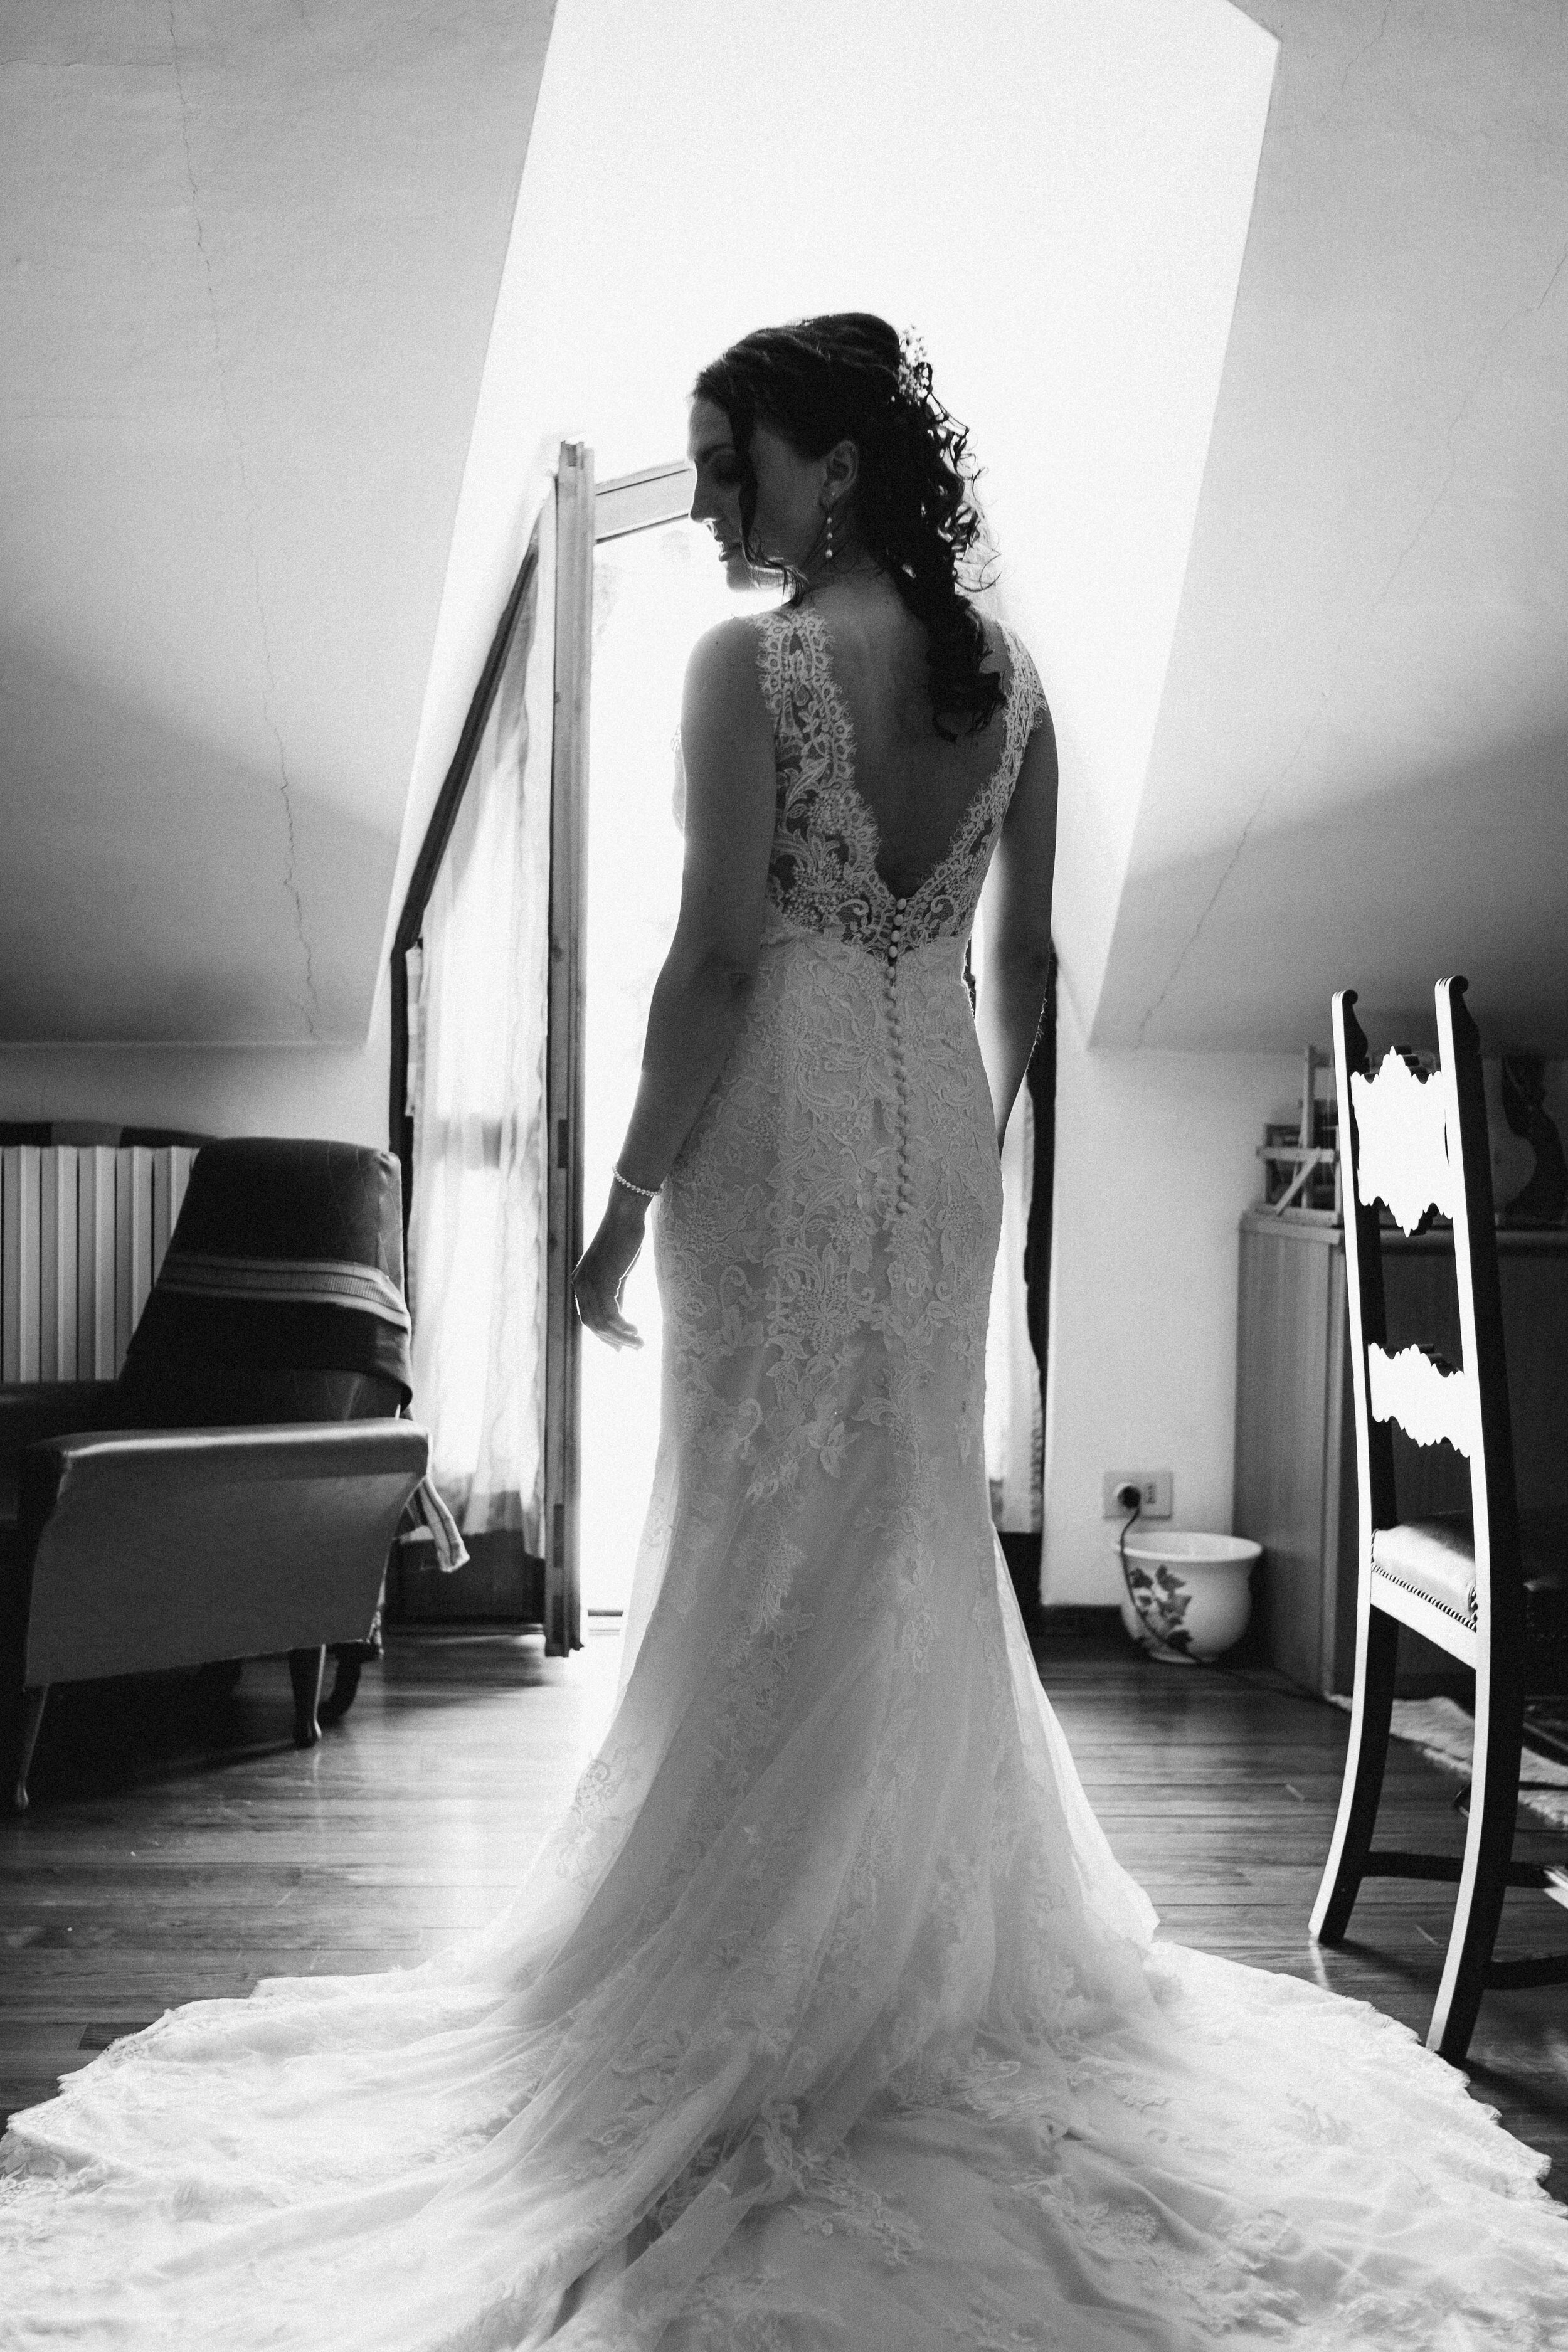 011 - Preparazione sposa - Miriam Callegari Fotografa.JPG